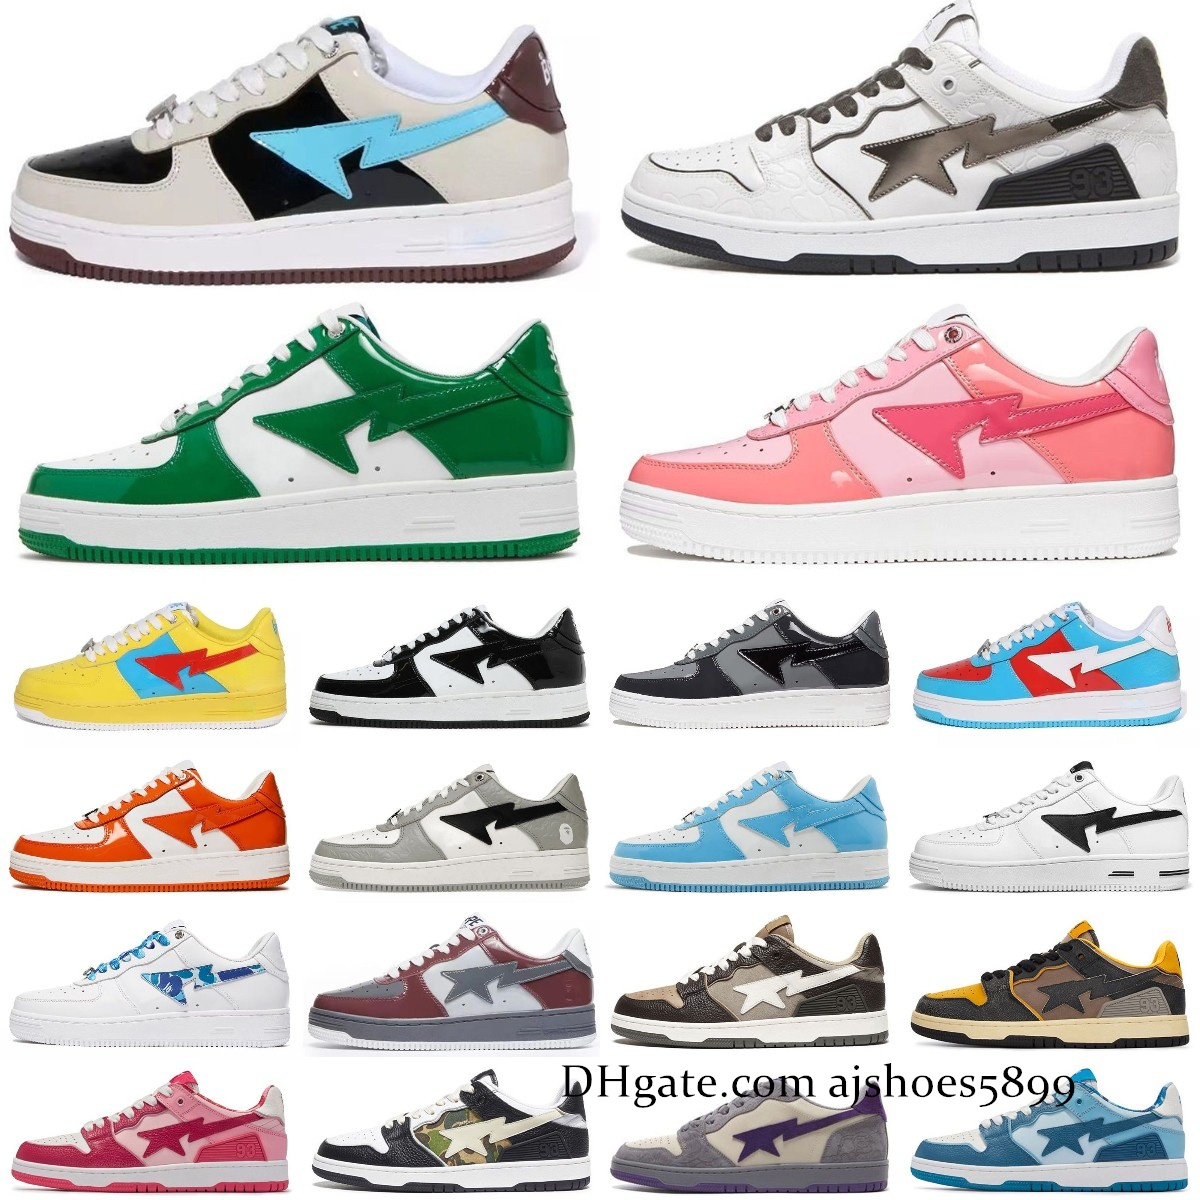 

2023 Designer Bapesta Shoes Platform Bapestar Sneakers for Men Women Black White Camo Combo Pink Pastel Bapestas Baped Sk8 Sta Plate-forme shoes 36-45, Box